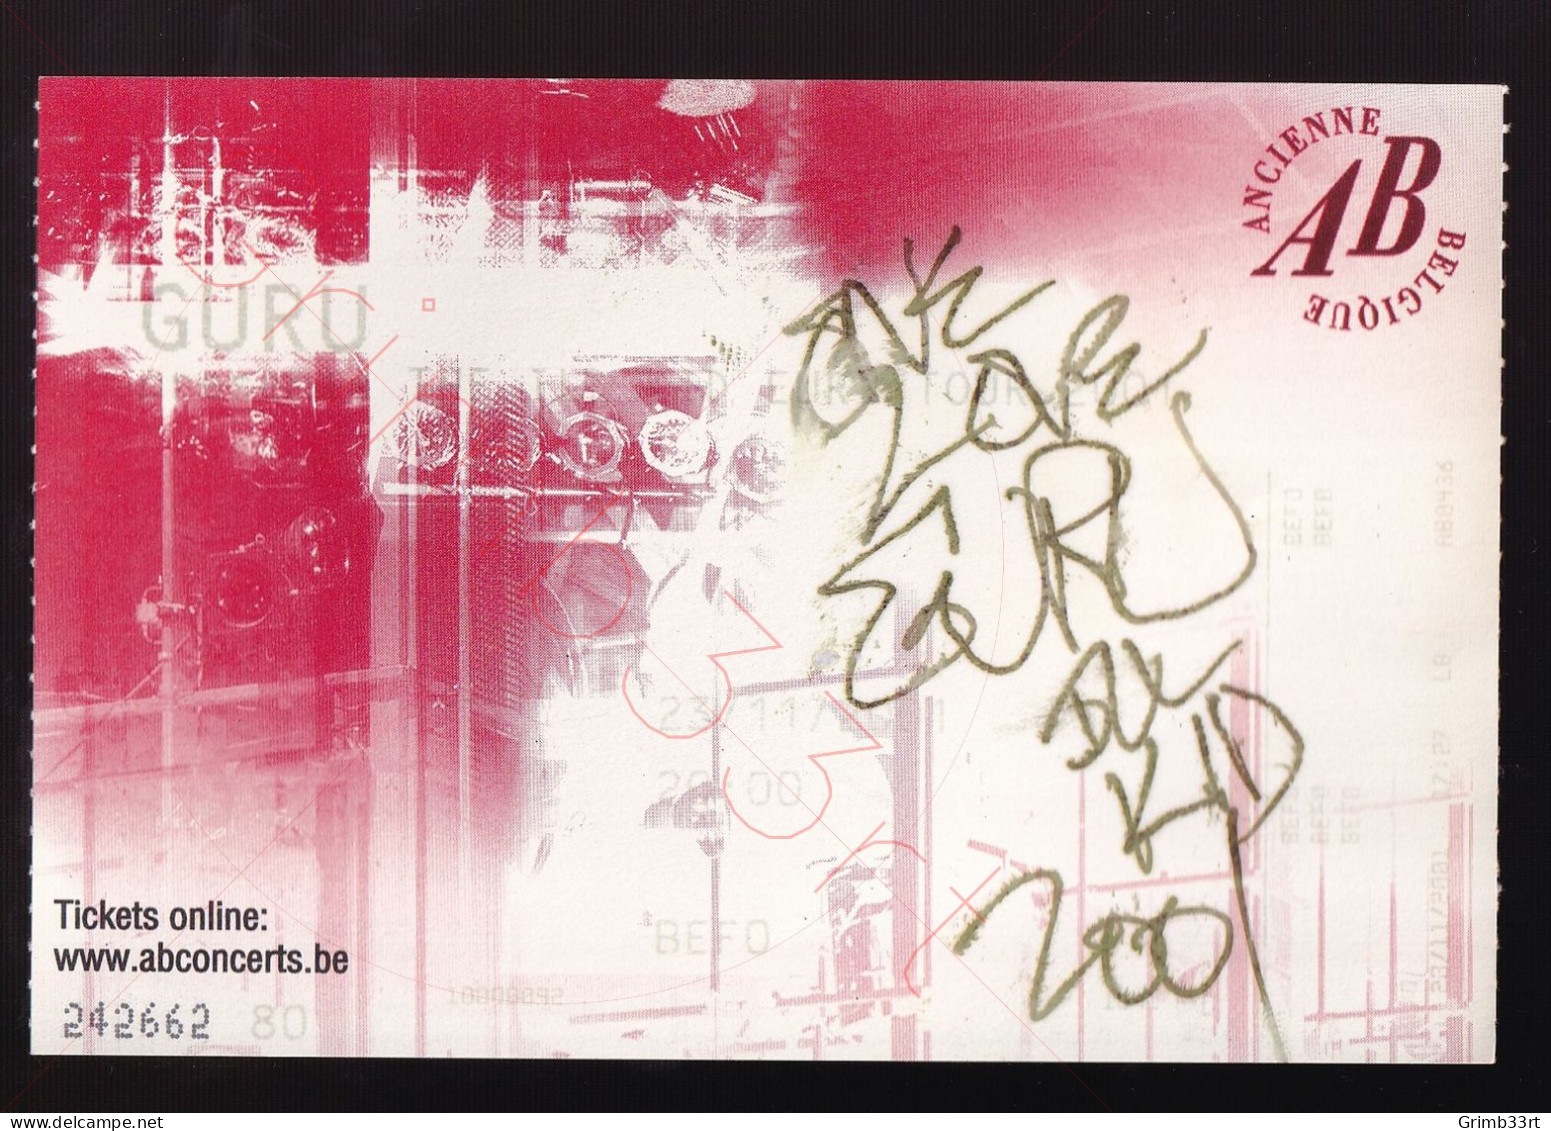 Guru (GESIGNEERD!) - The Ill Kid Tour - 23 November 2001 - Ancienne Belgique (BE) - Concert Ticket - Biglietti Per Concerti